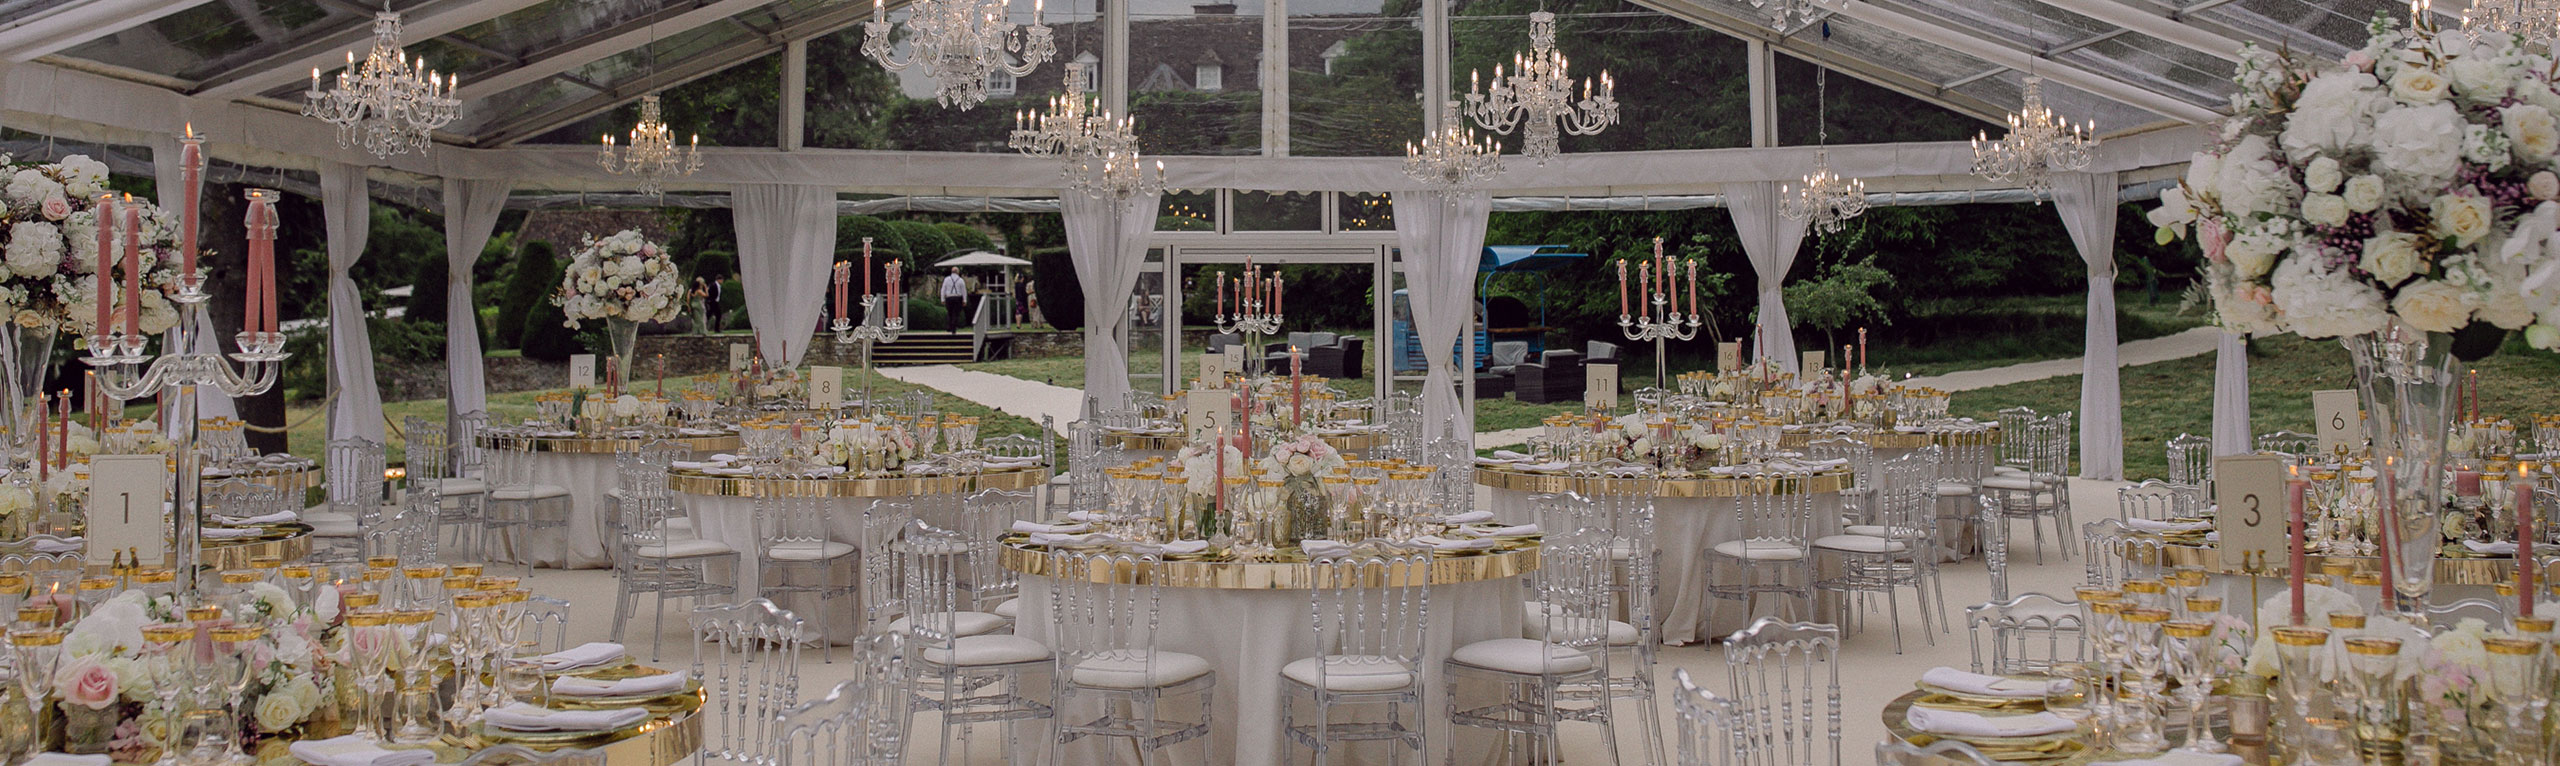 jemma-jade-events-luxury-wedding-planner-london-slide-2-new